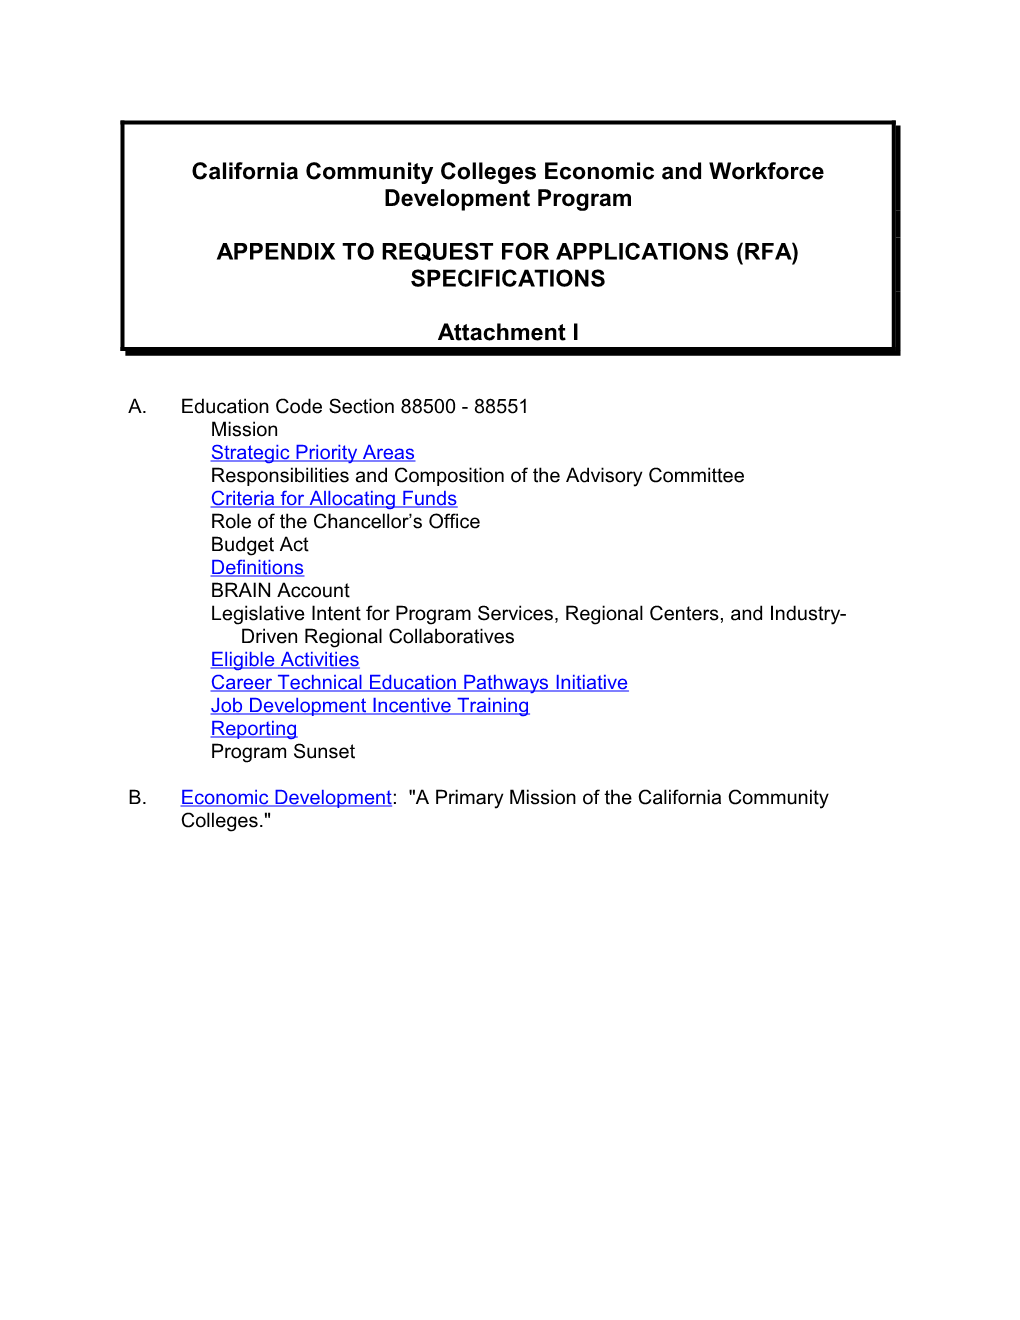 California Community Colleges Economic and Workforce Development Program